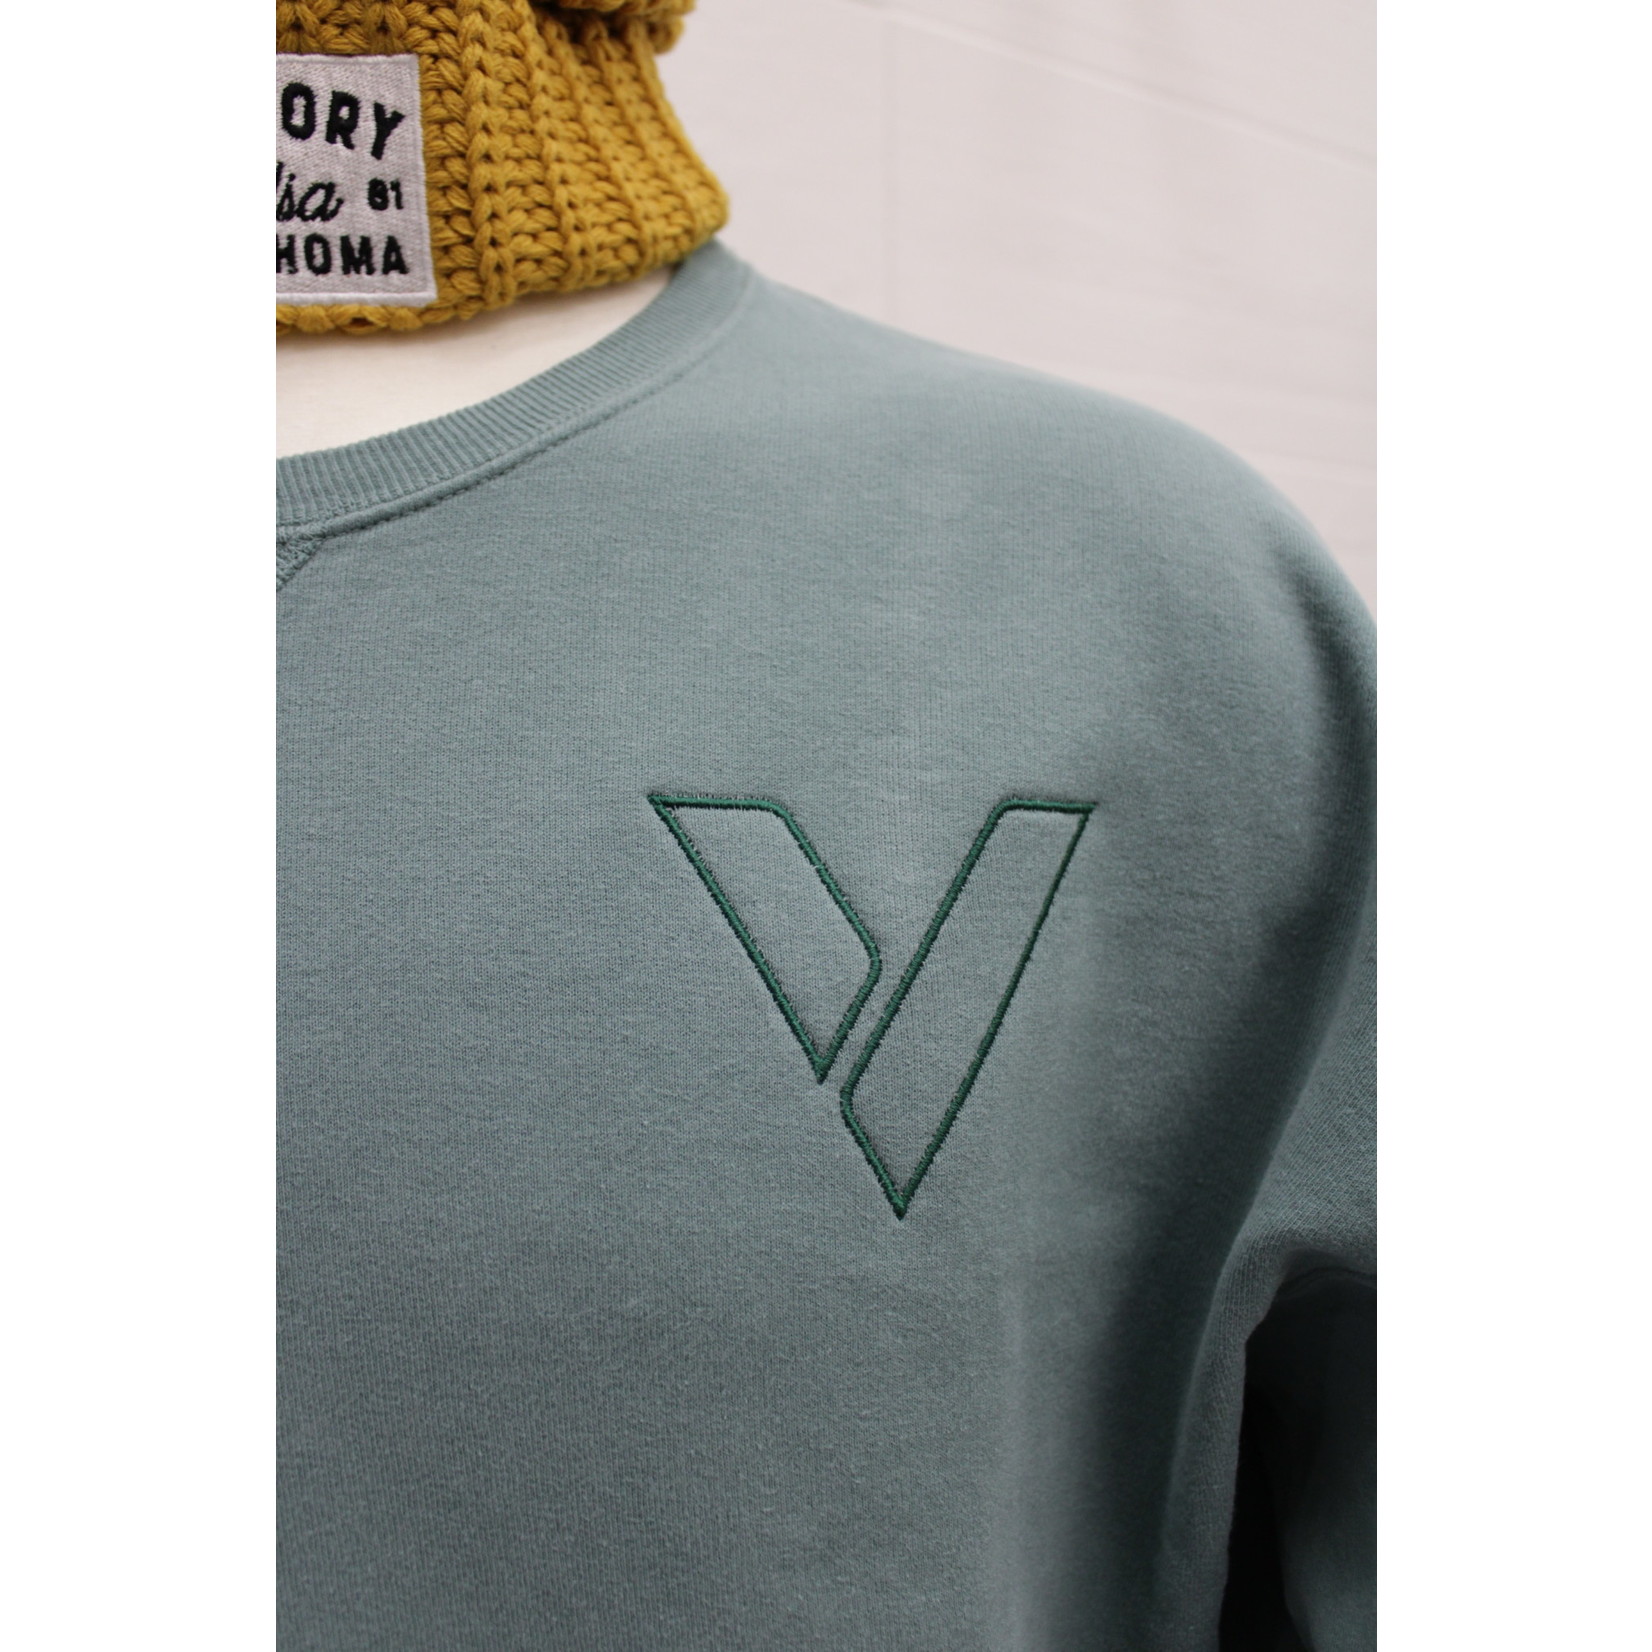 Embroidered V Crew Sweatshirt